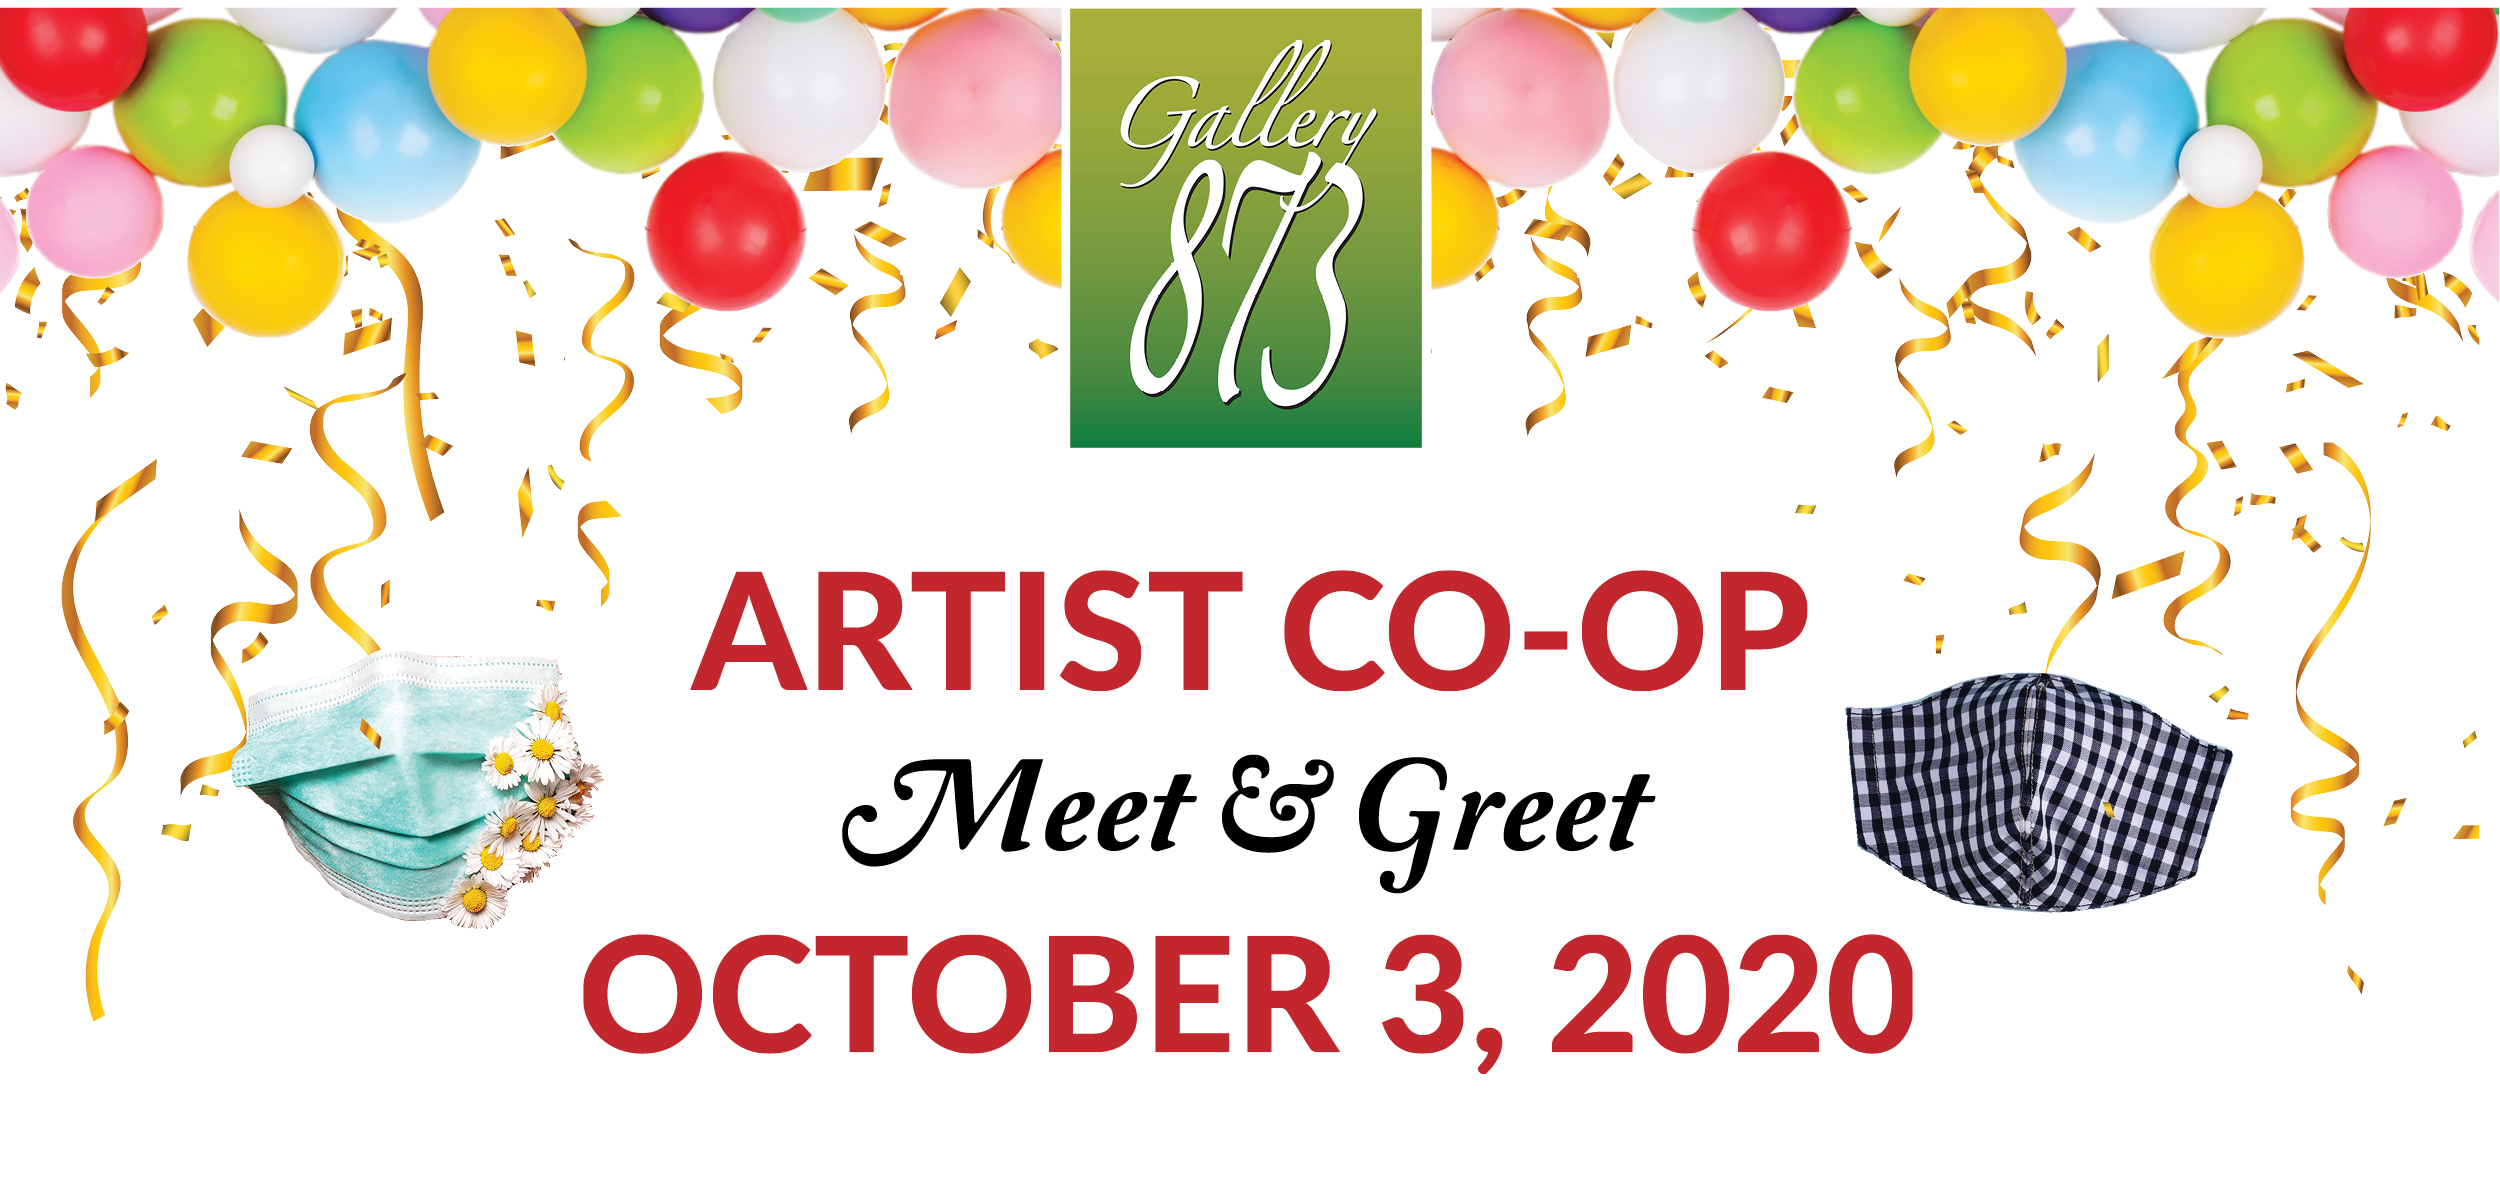 Gallery 873, Artist Co-op, Meet and Greet October 3, 2020